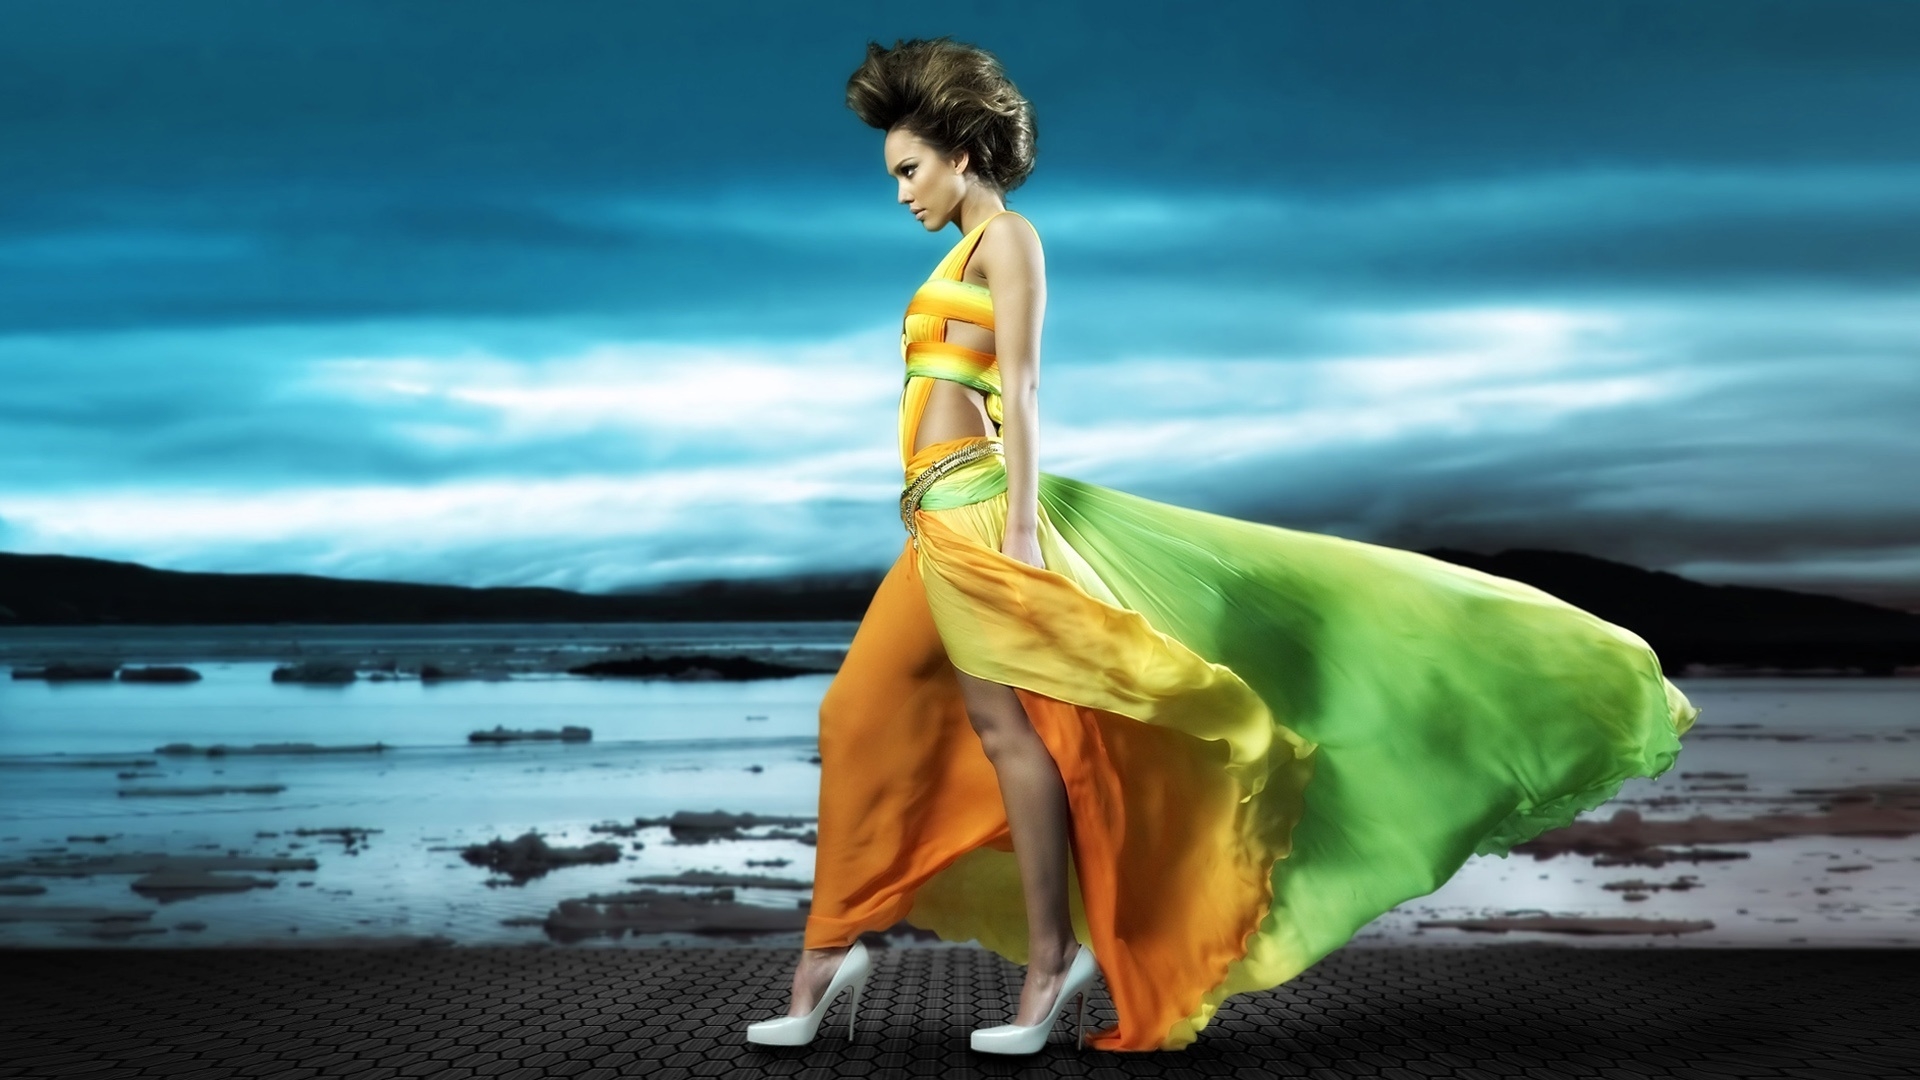 Jessica Alba Raibow Dress for 1920 x 1080 HDTV 1080p resolution